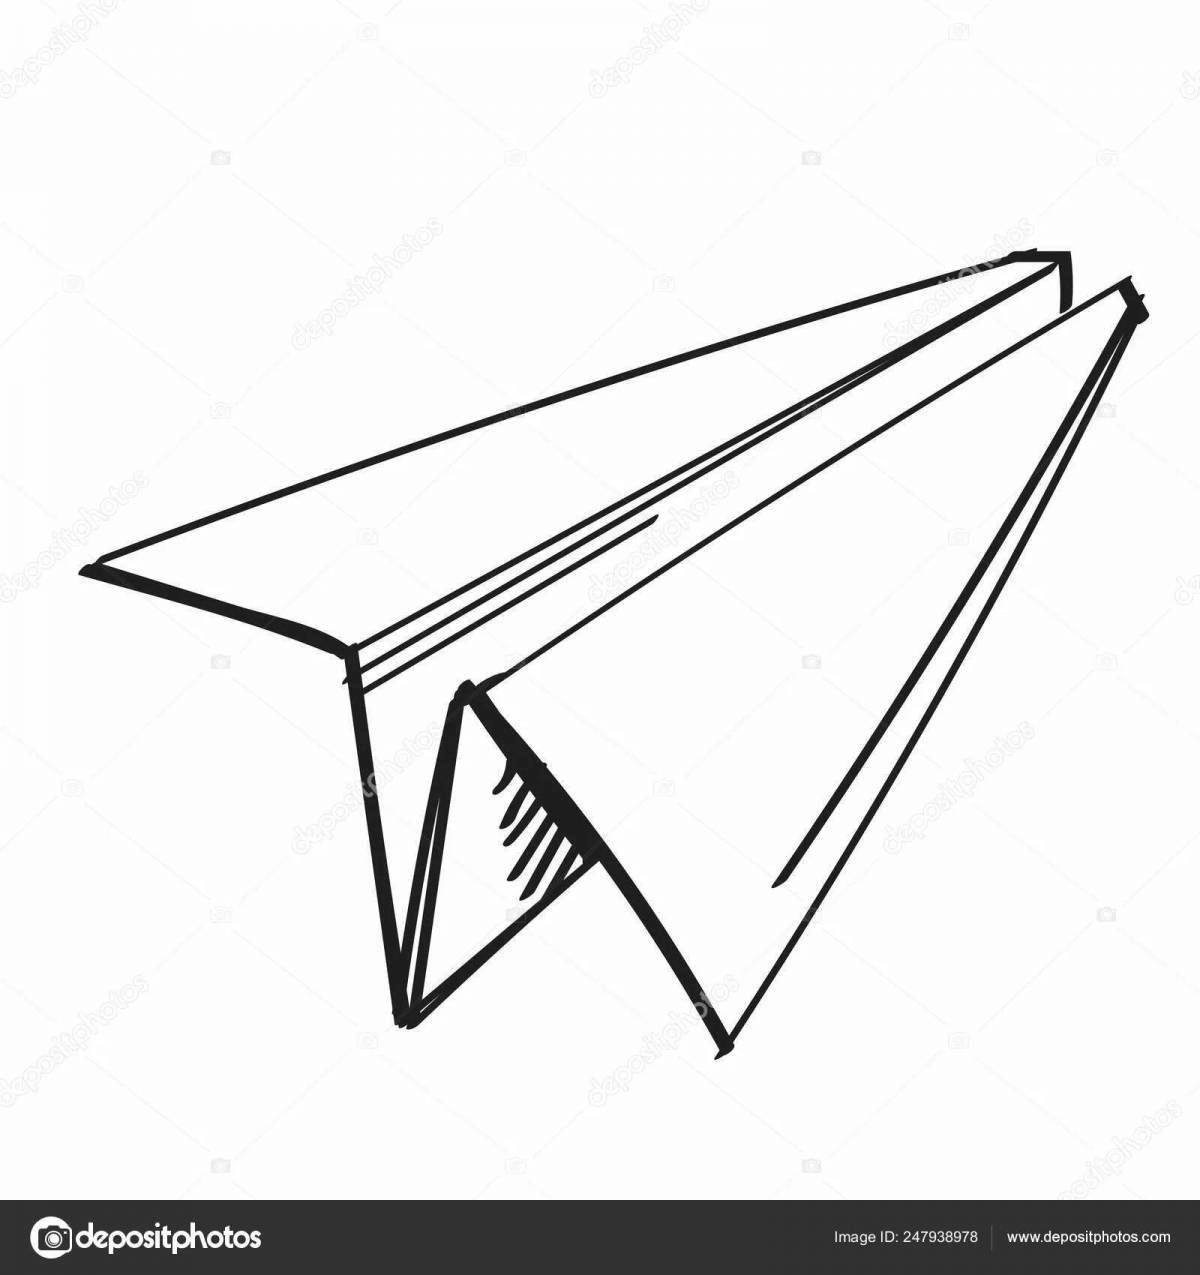 Fun coloring paper plane